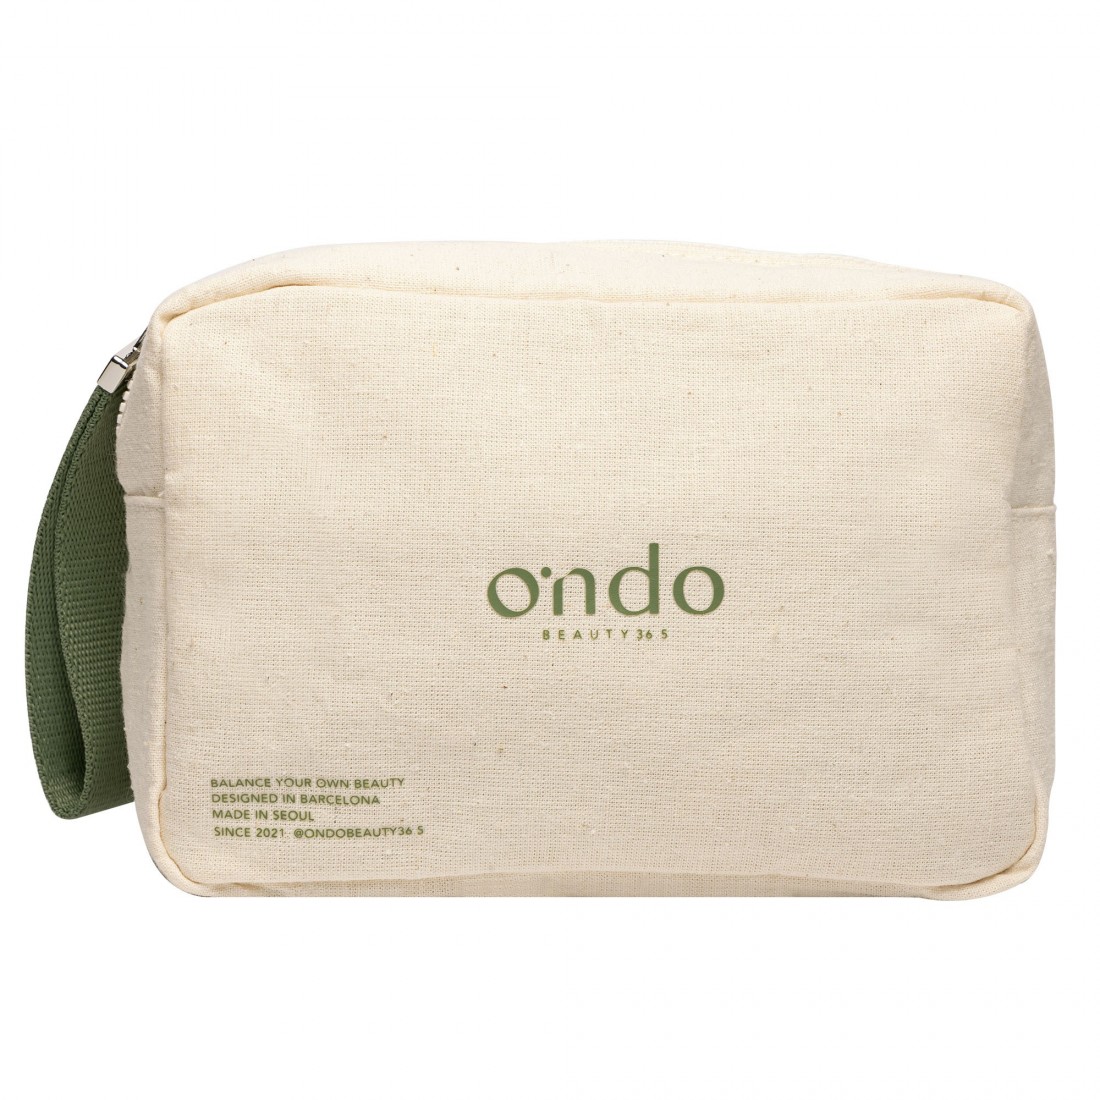 Trousse Ondo - Ondo Beauty 36.5